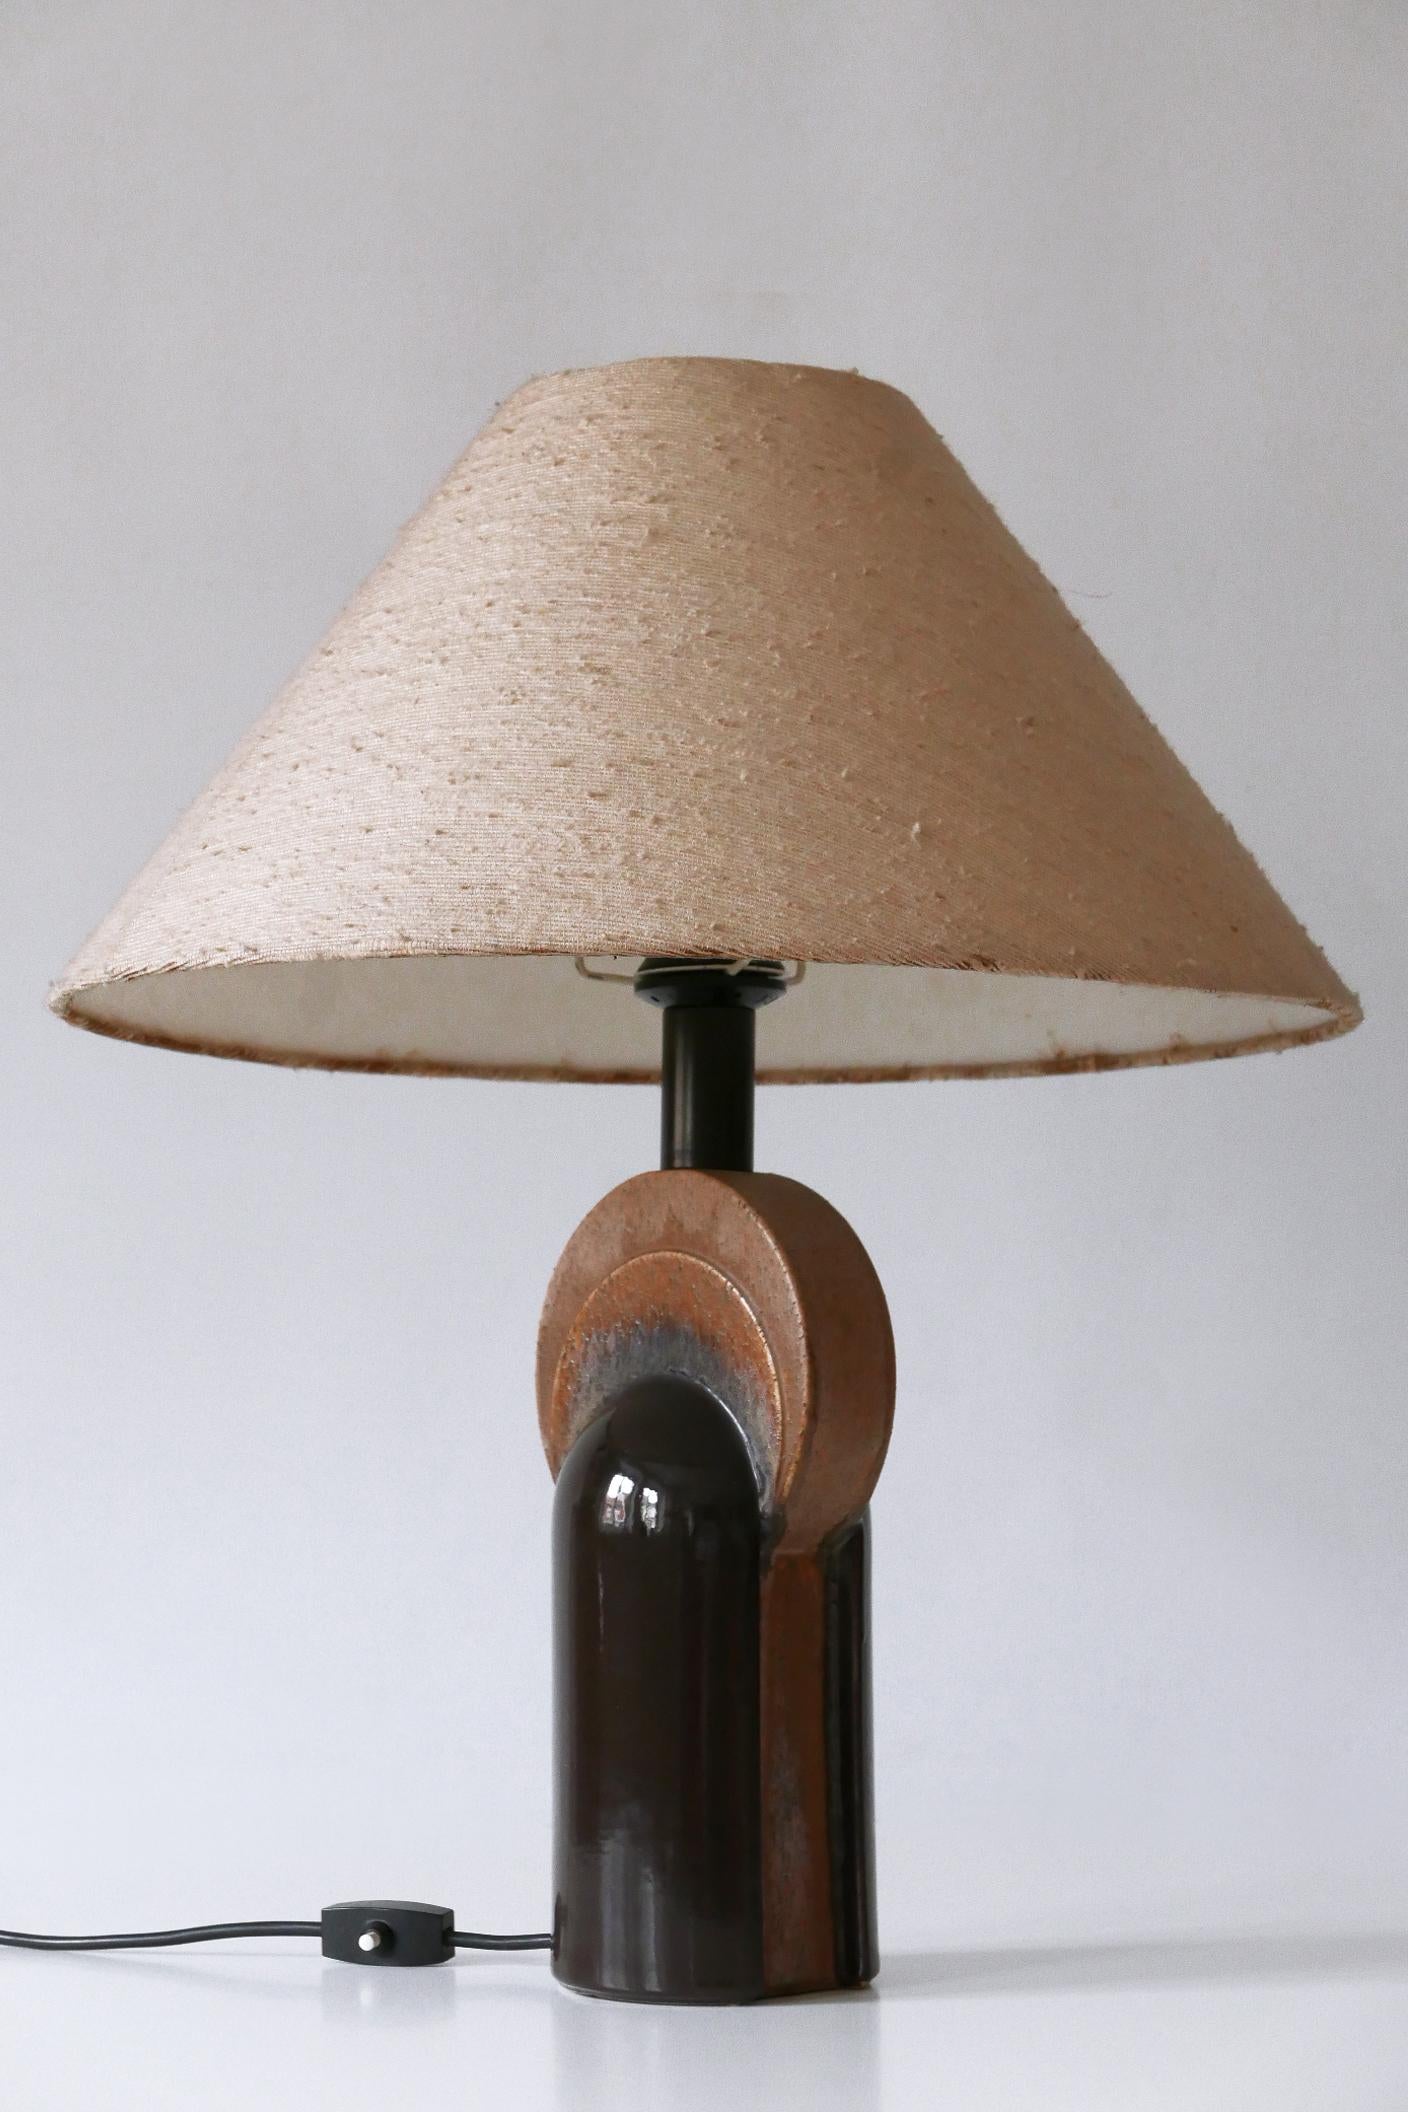 Elegant Mid-Century Modern Ceramic Table Lamp by Leola Design Germany 1960s For Sale 4